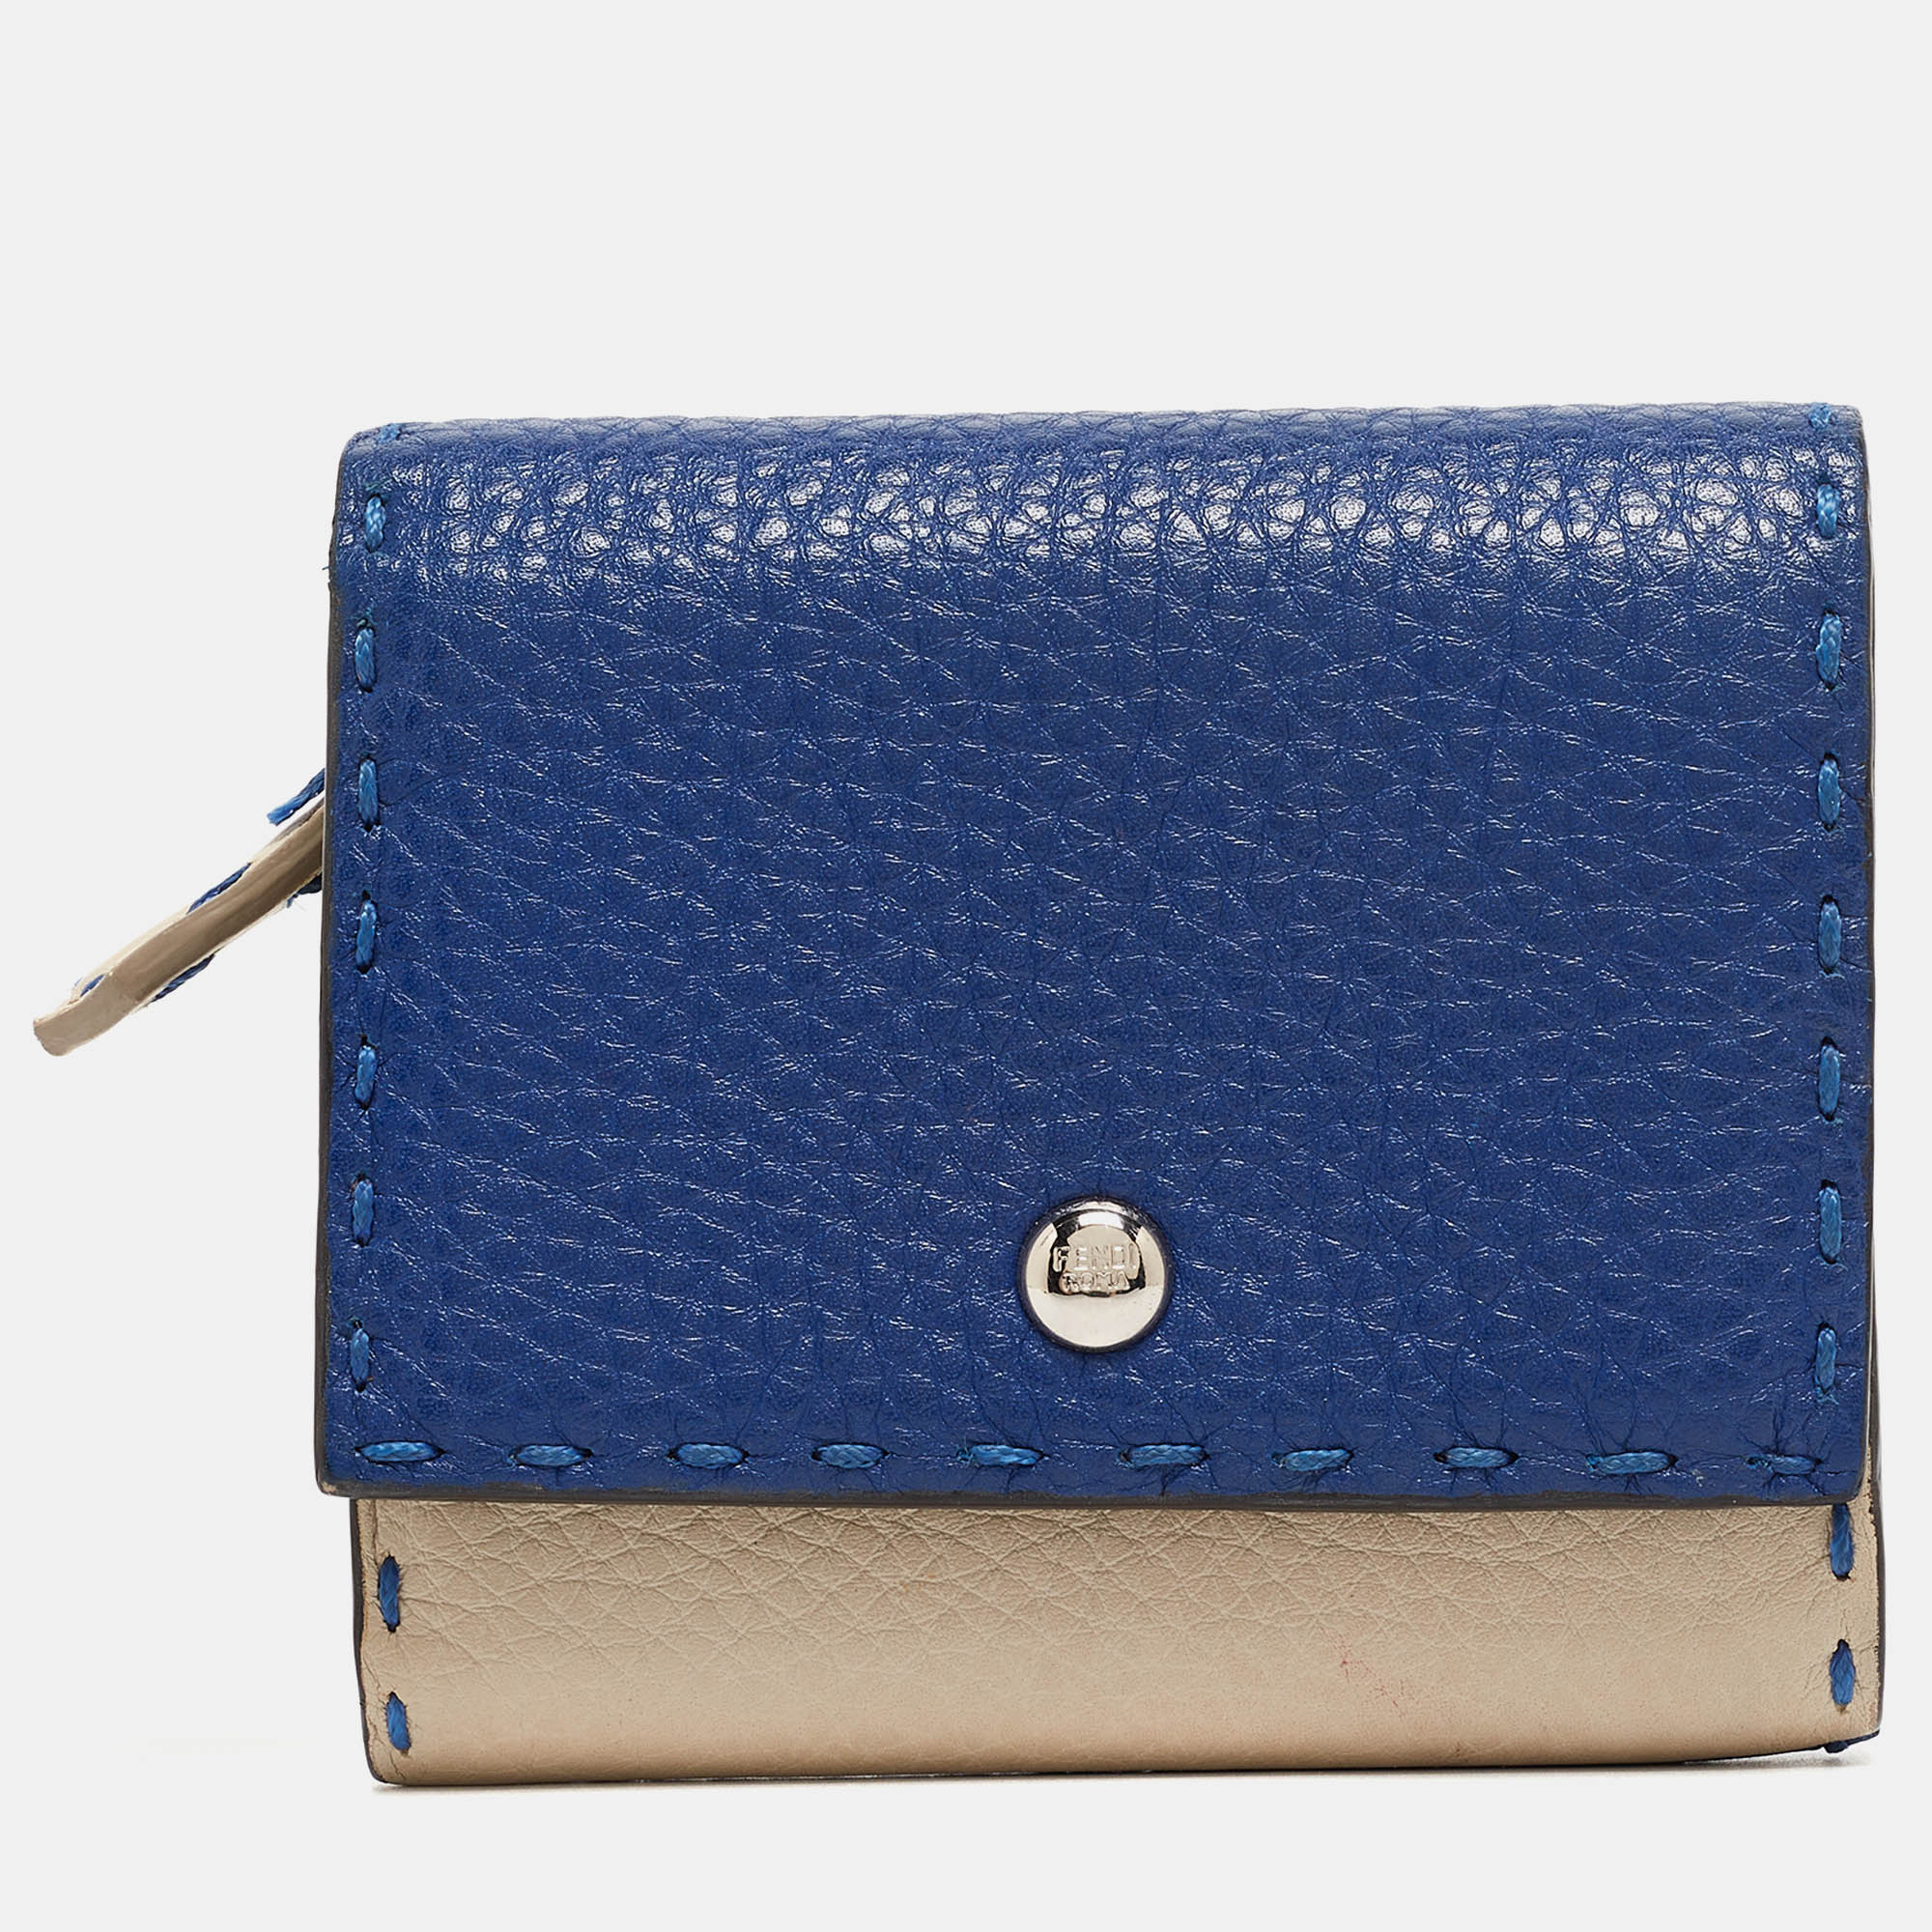 Fendi blue/white selleria leather flap compact wallet